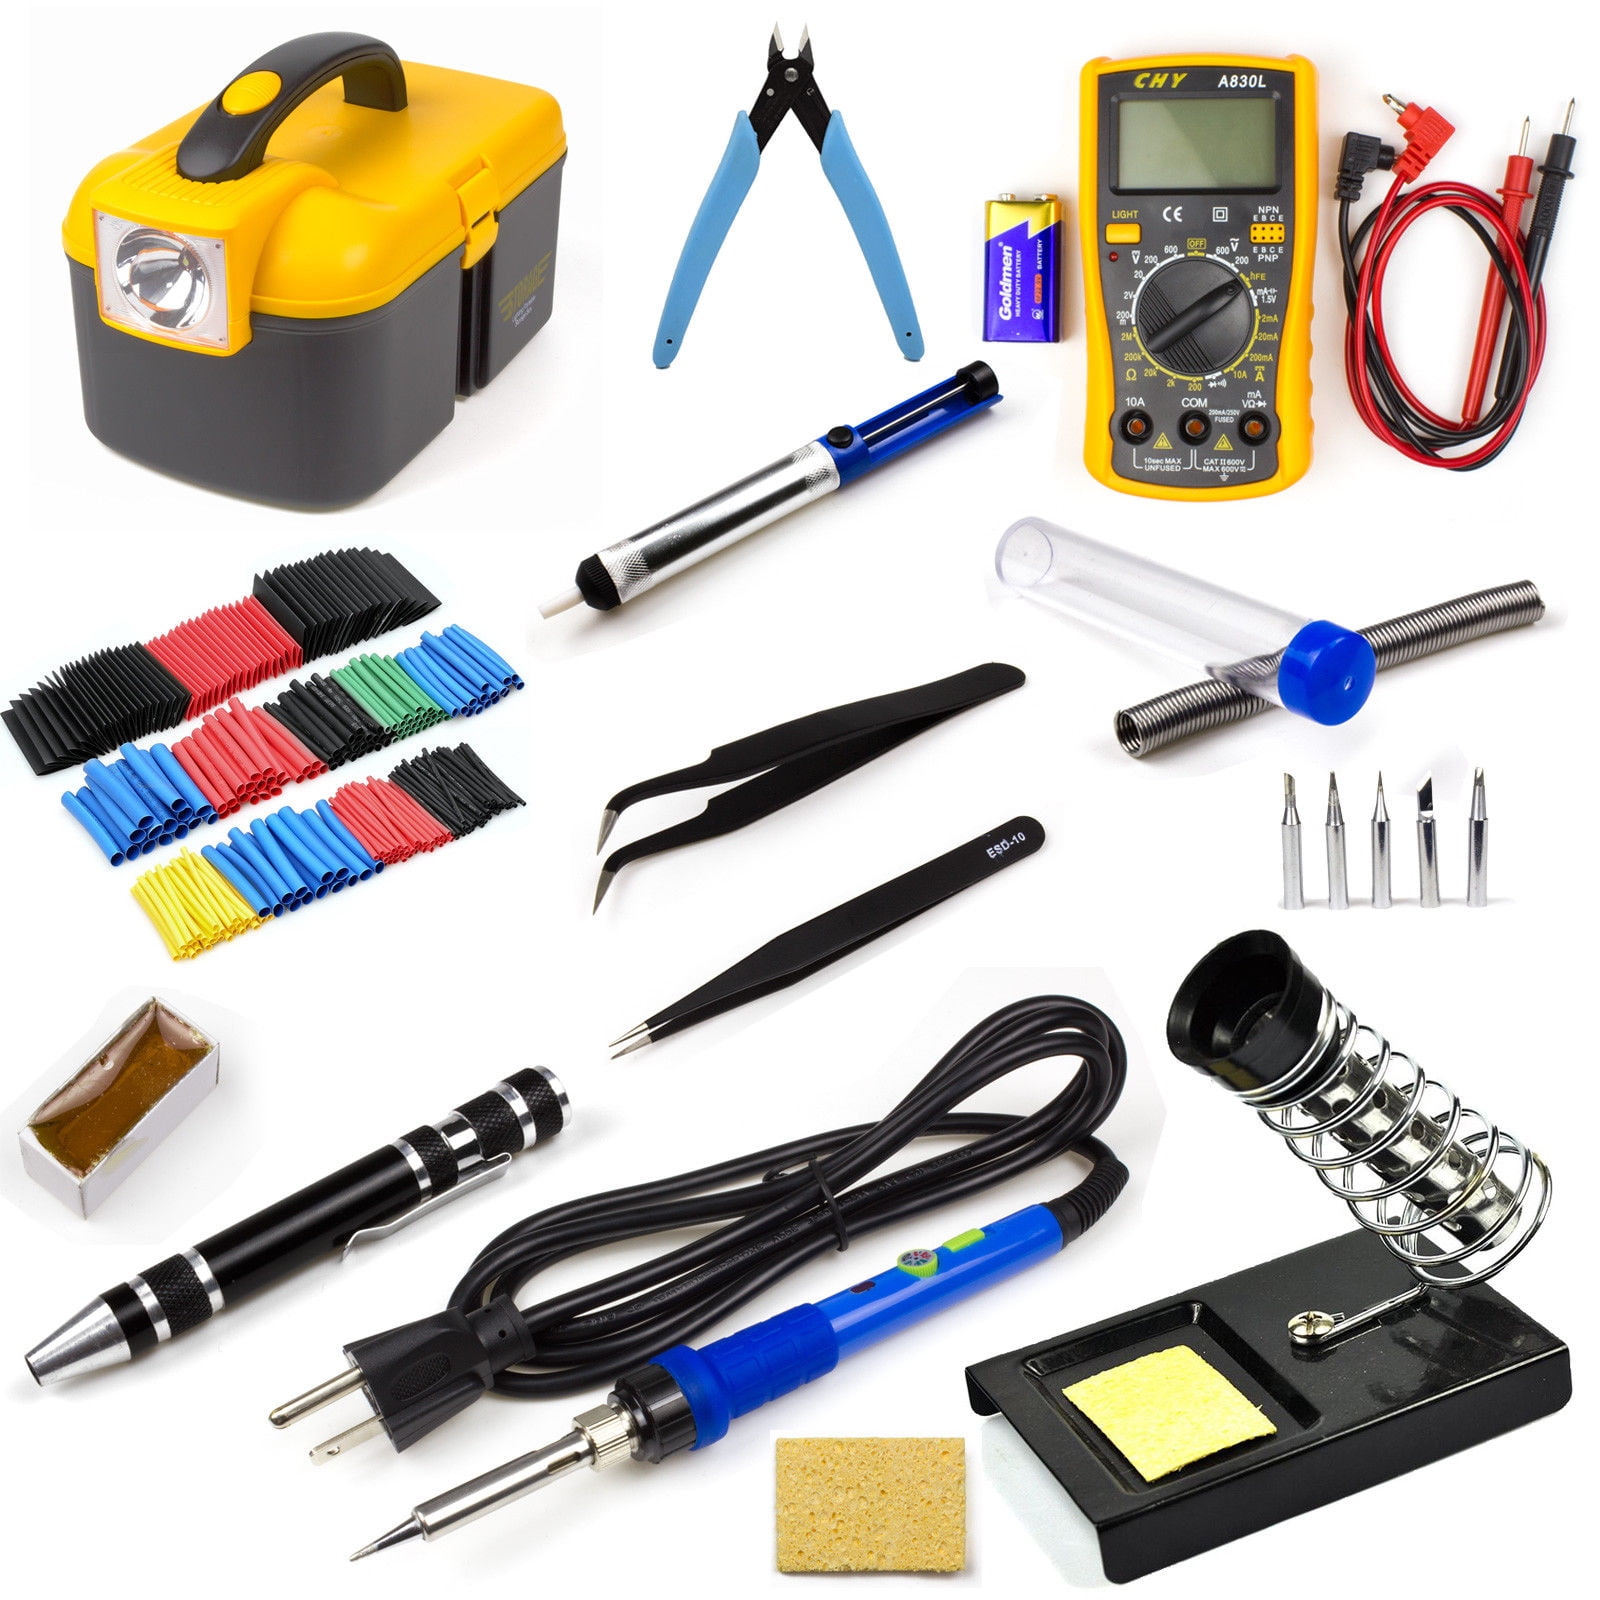 CAUTIN soldering iron kit with Digital multimeter 6000 counts AC/DC voltage  meter Flash light solder iron 80W 220V welding tool - AliExpress